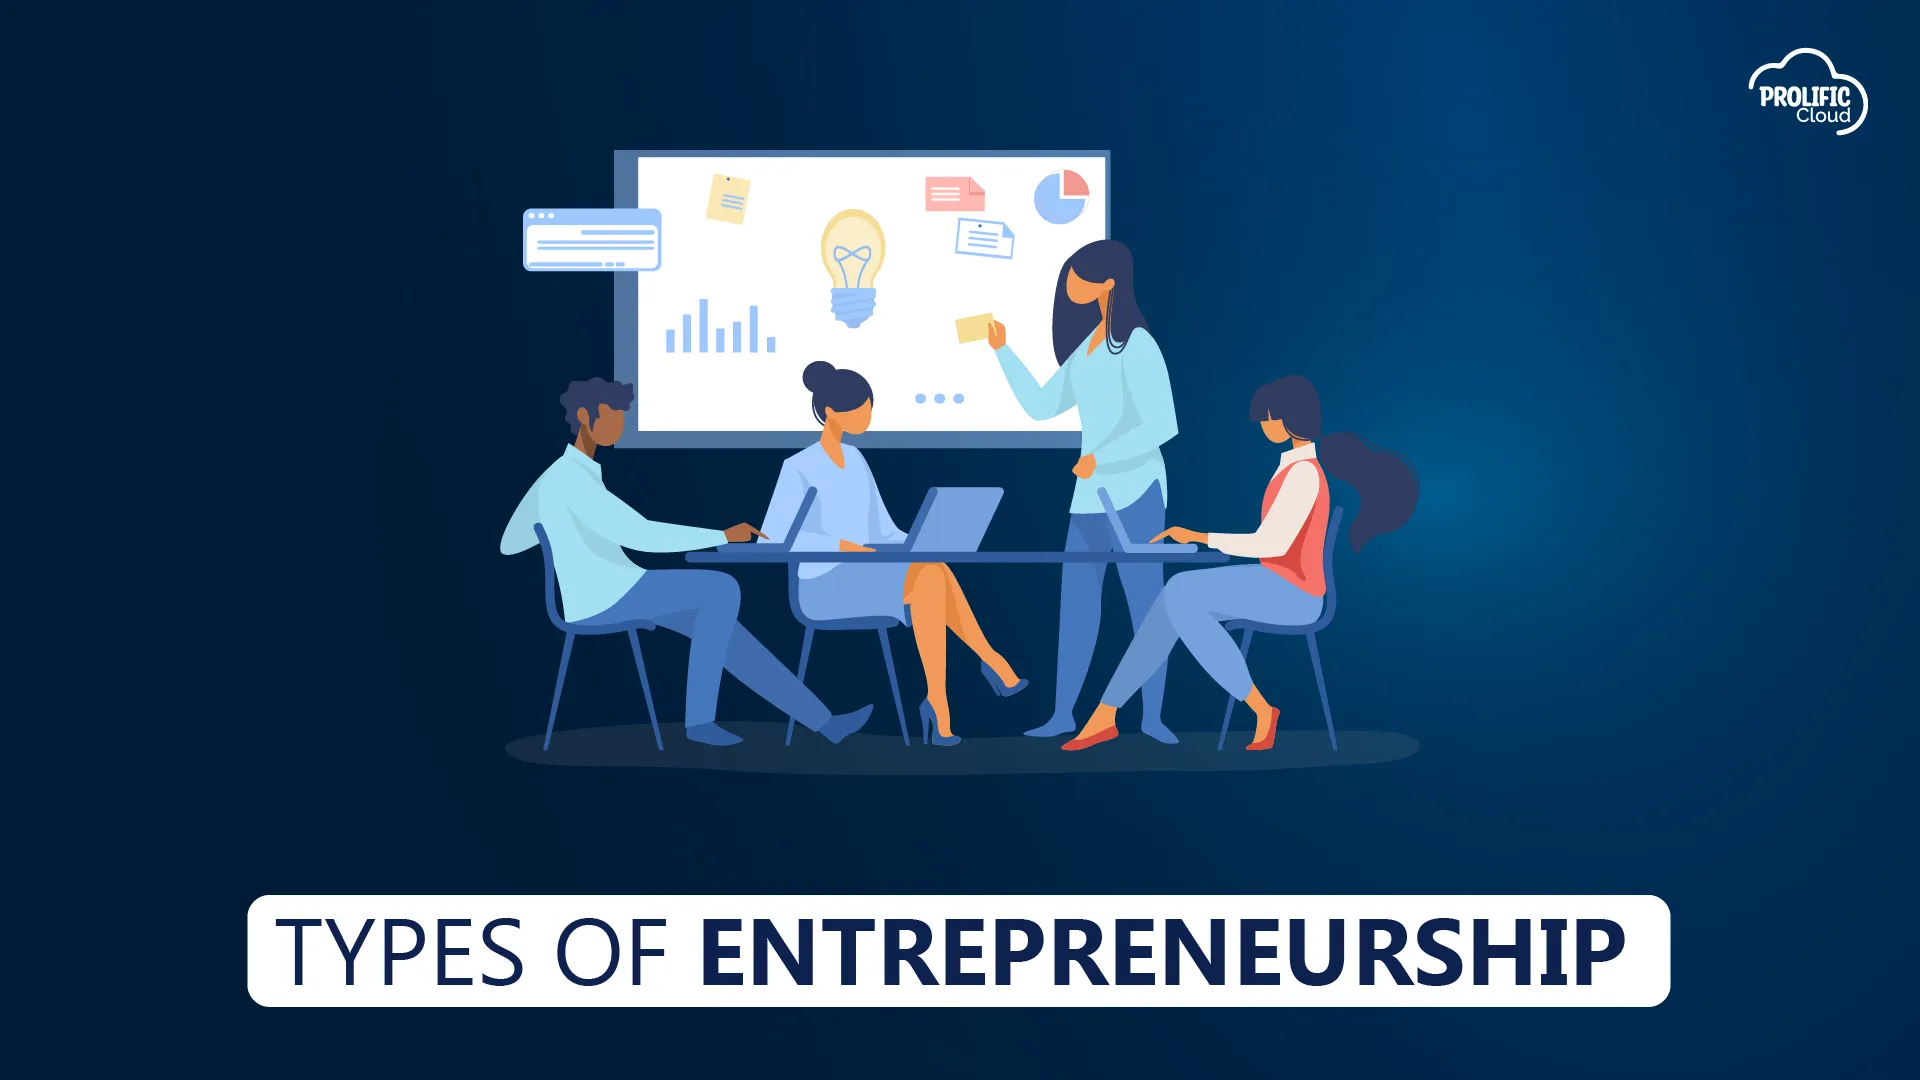 Types of entrepreneurship